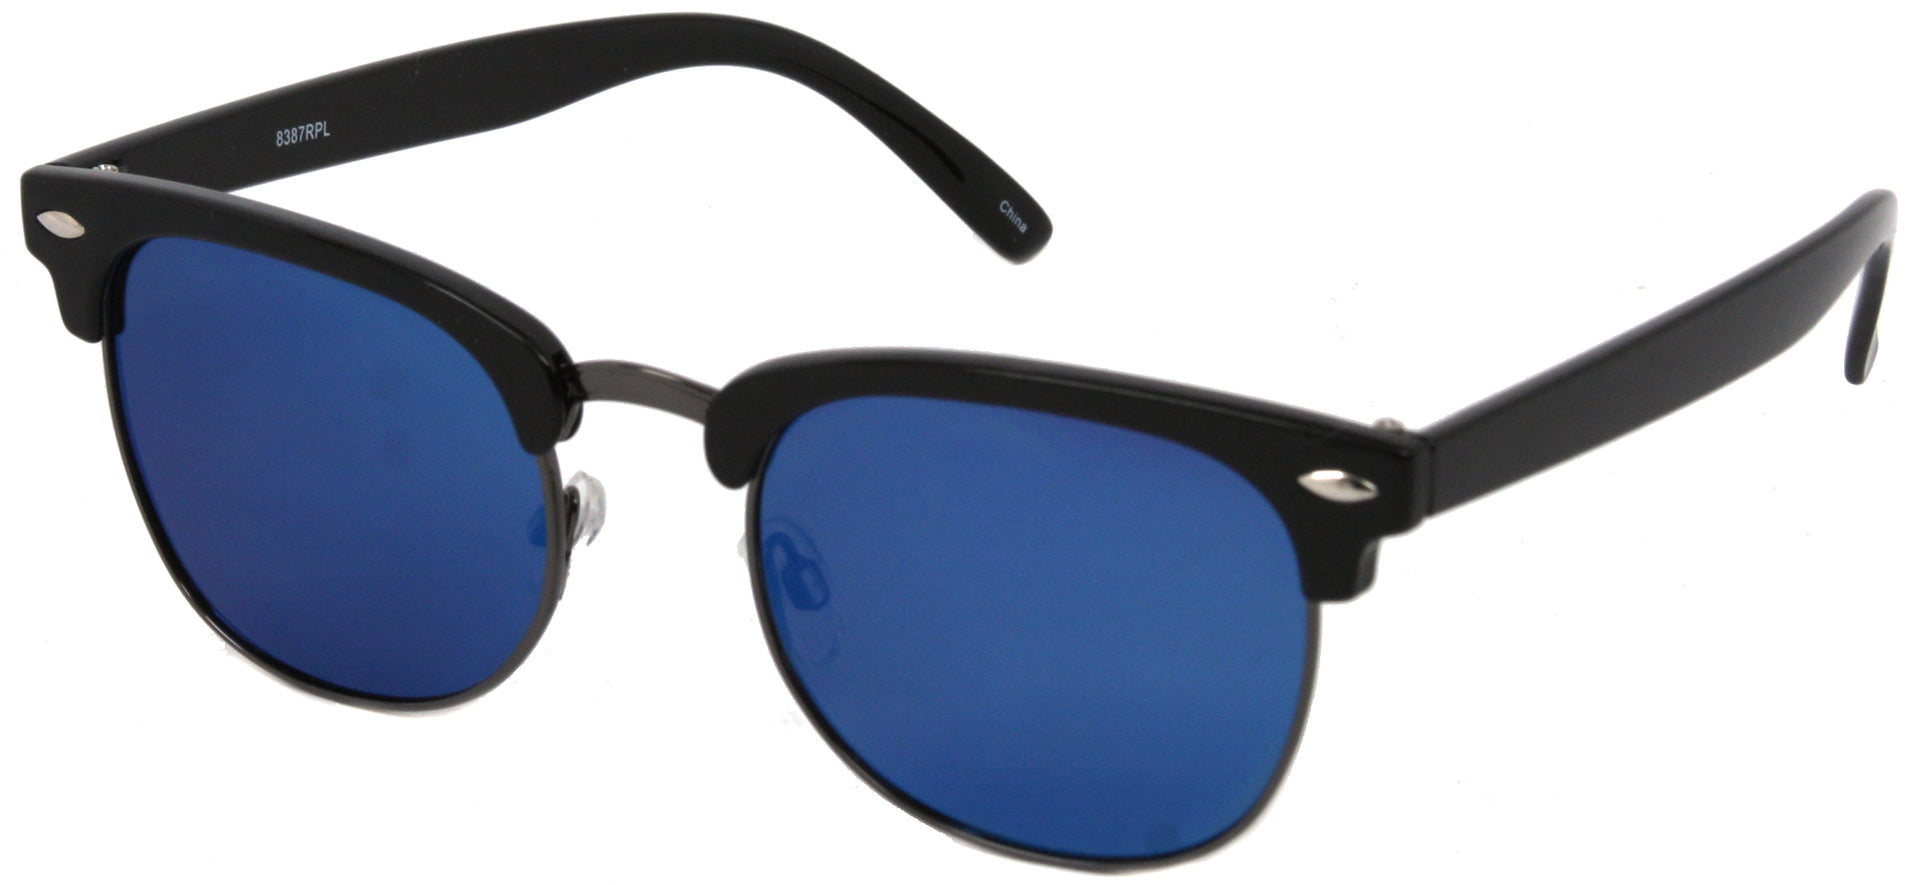 8387RPL - Wholesale Classic Style Polarized Colored Mirror Sunglasses in Black